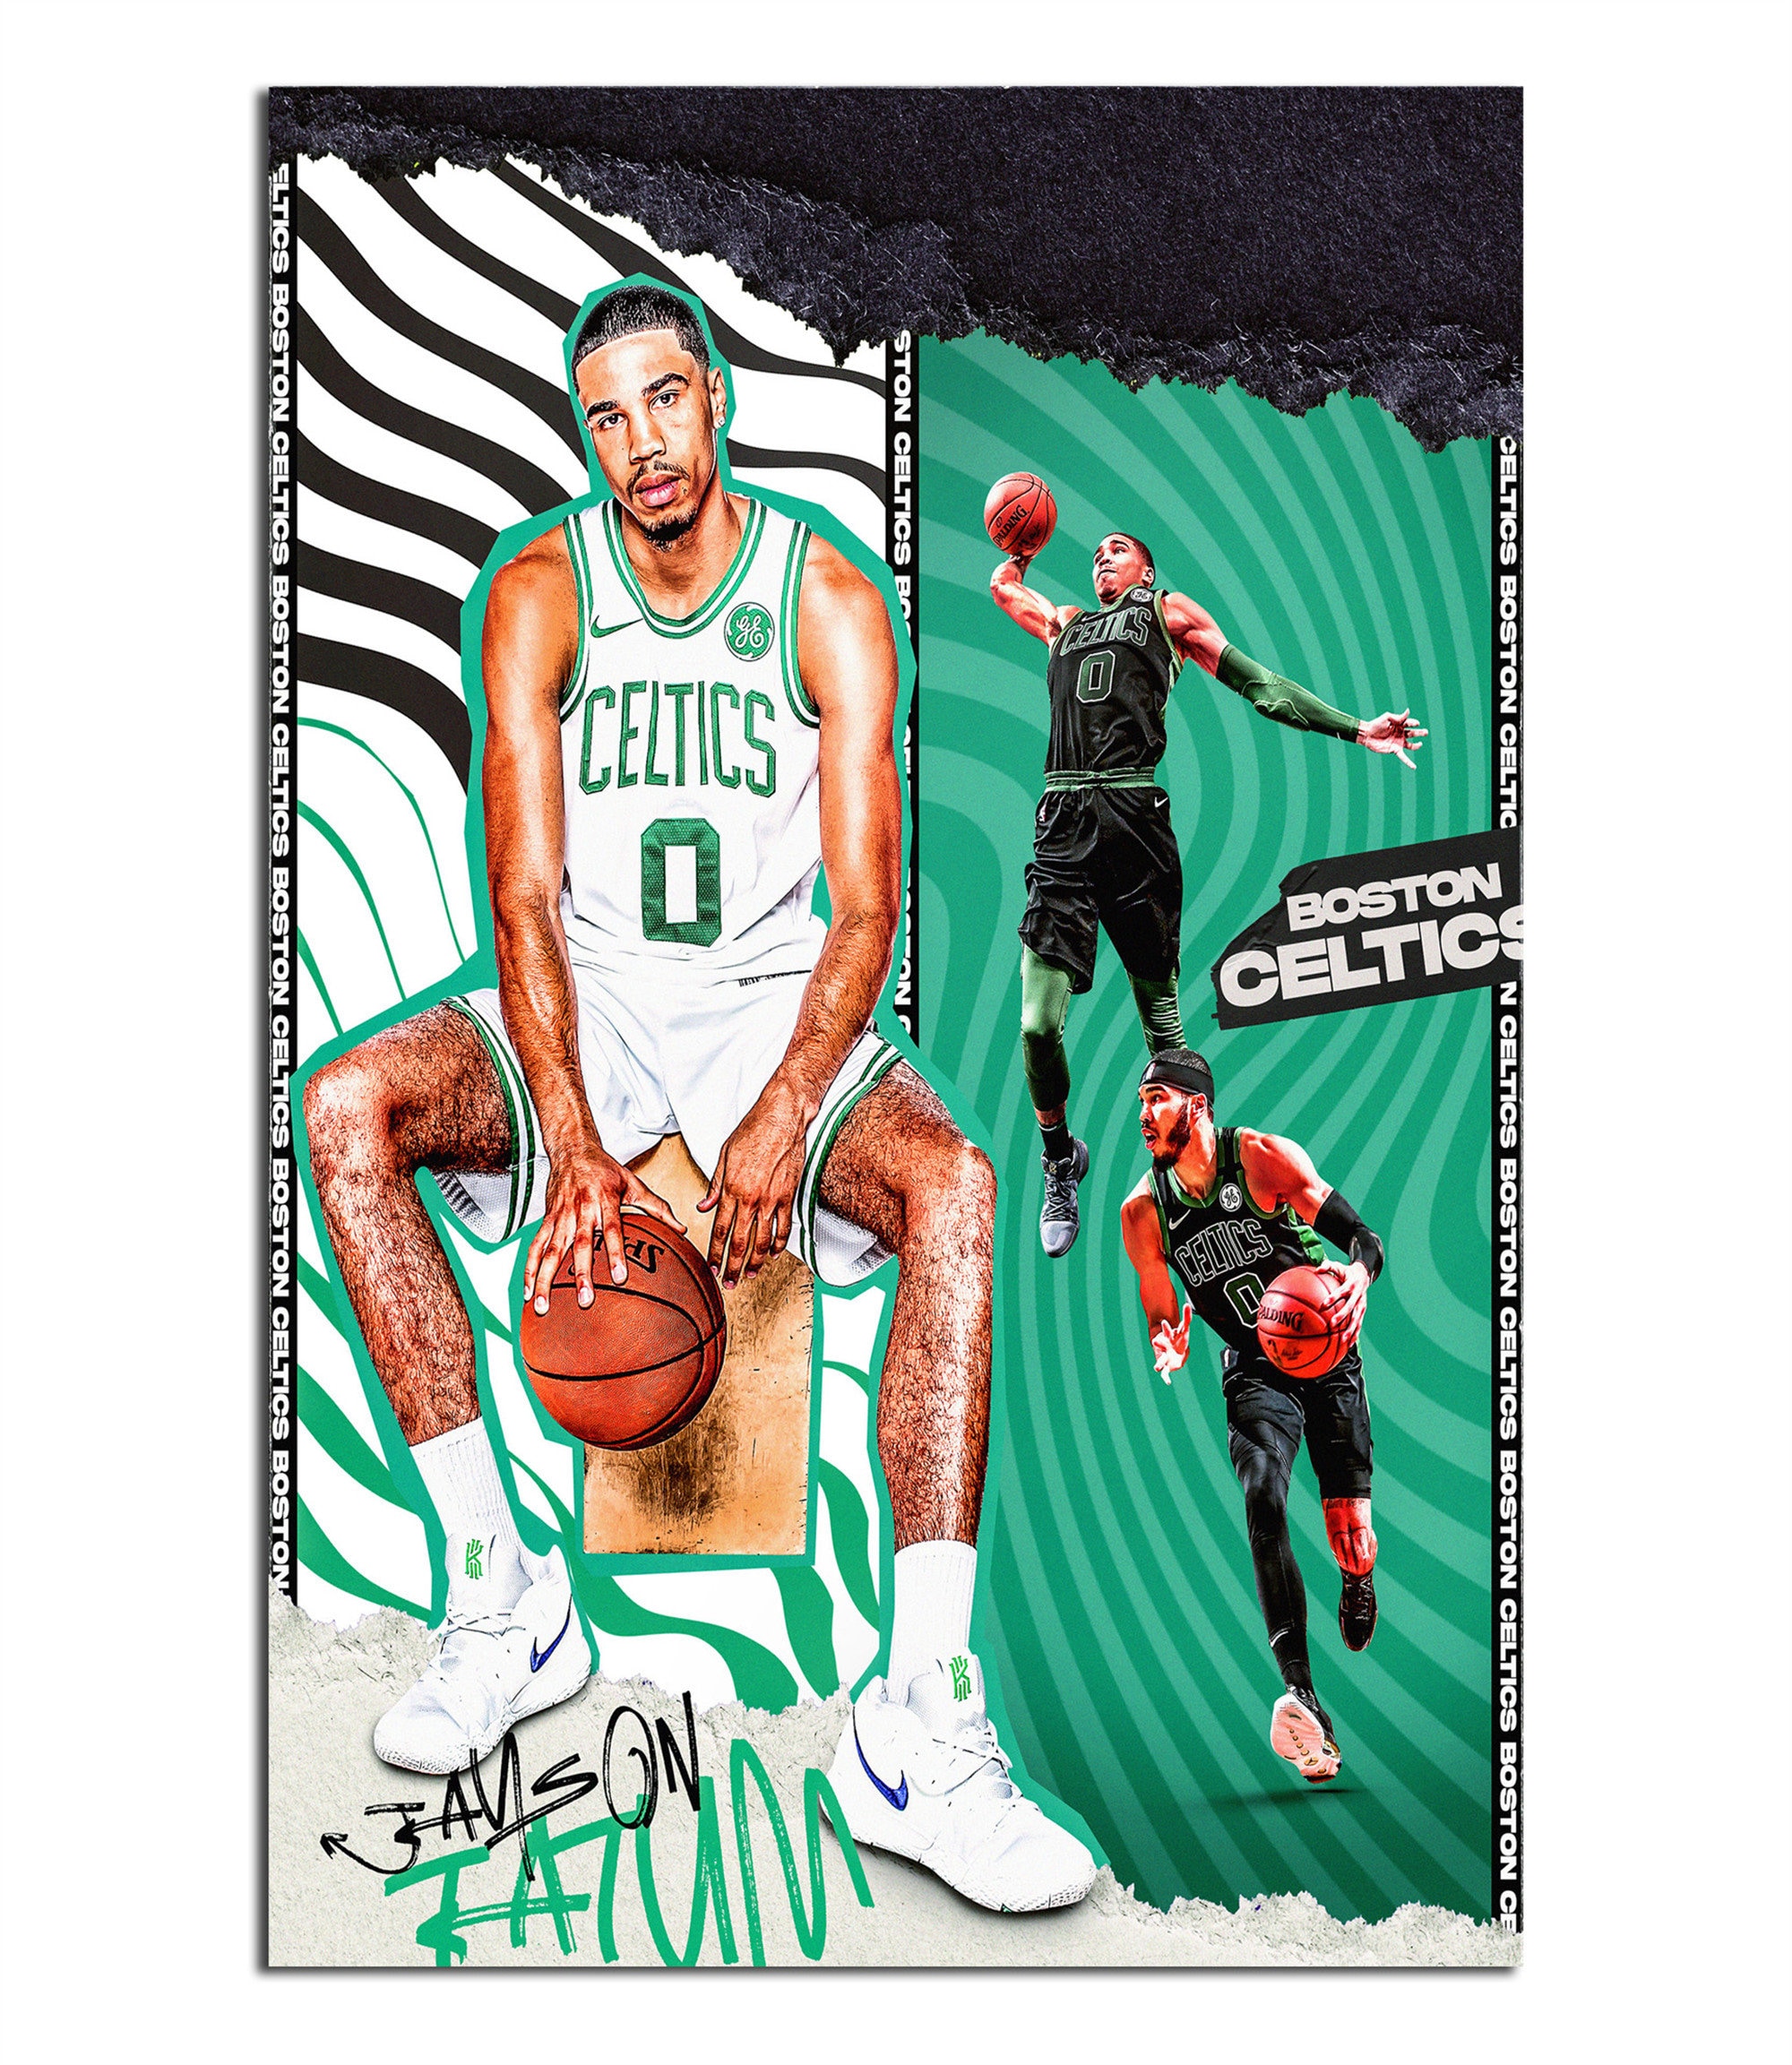 Jayson Taytom dunk Wallpaper  Boston celtics wallpaper, Basketball  photography, Jayson tatum